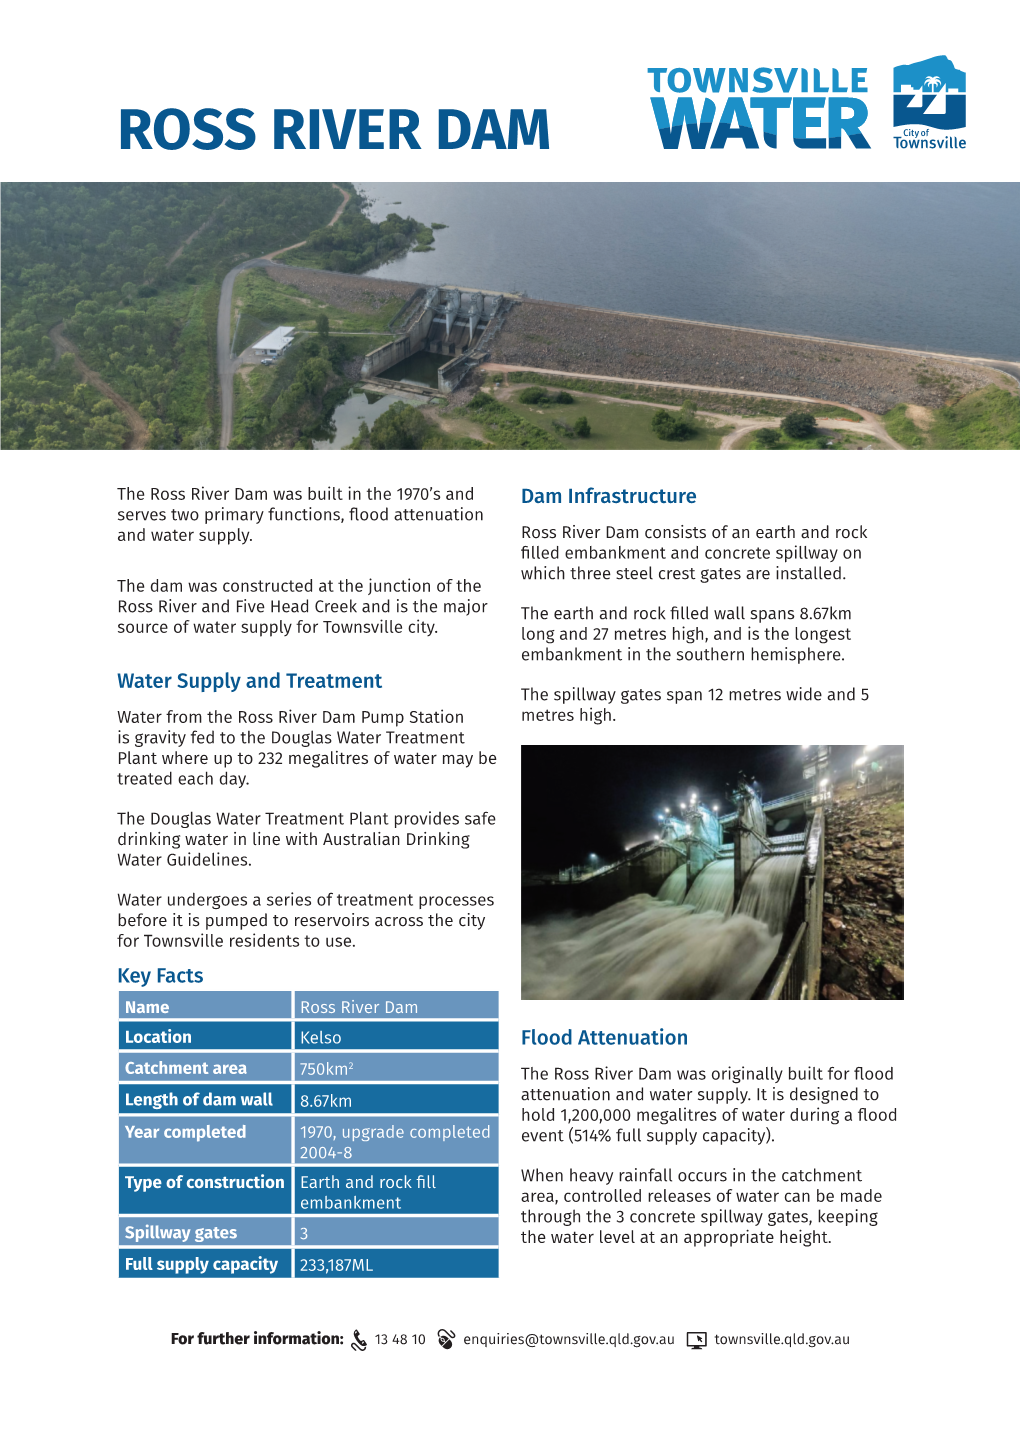 Ross River Dam Factsheet